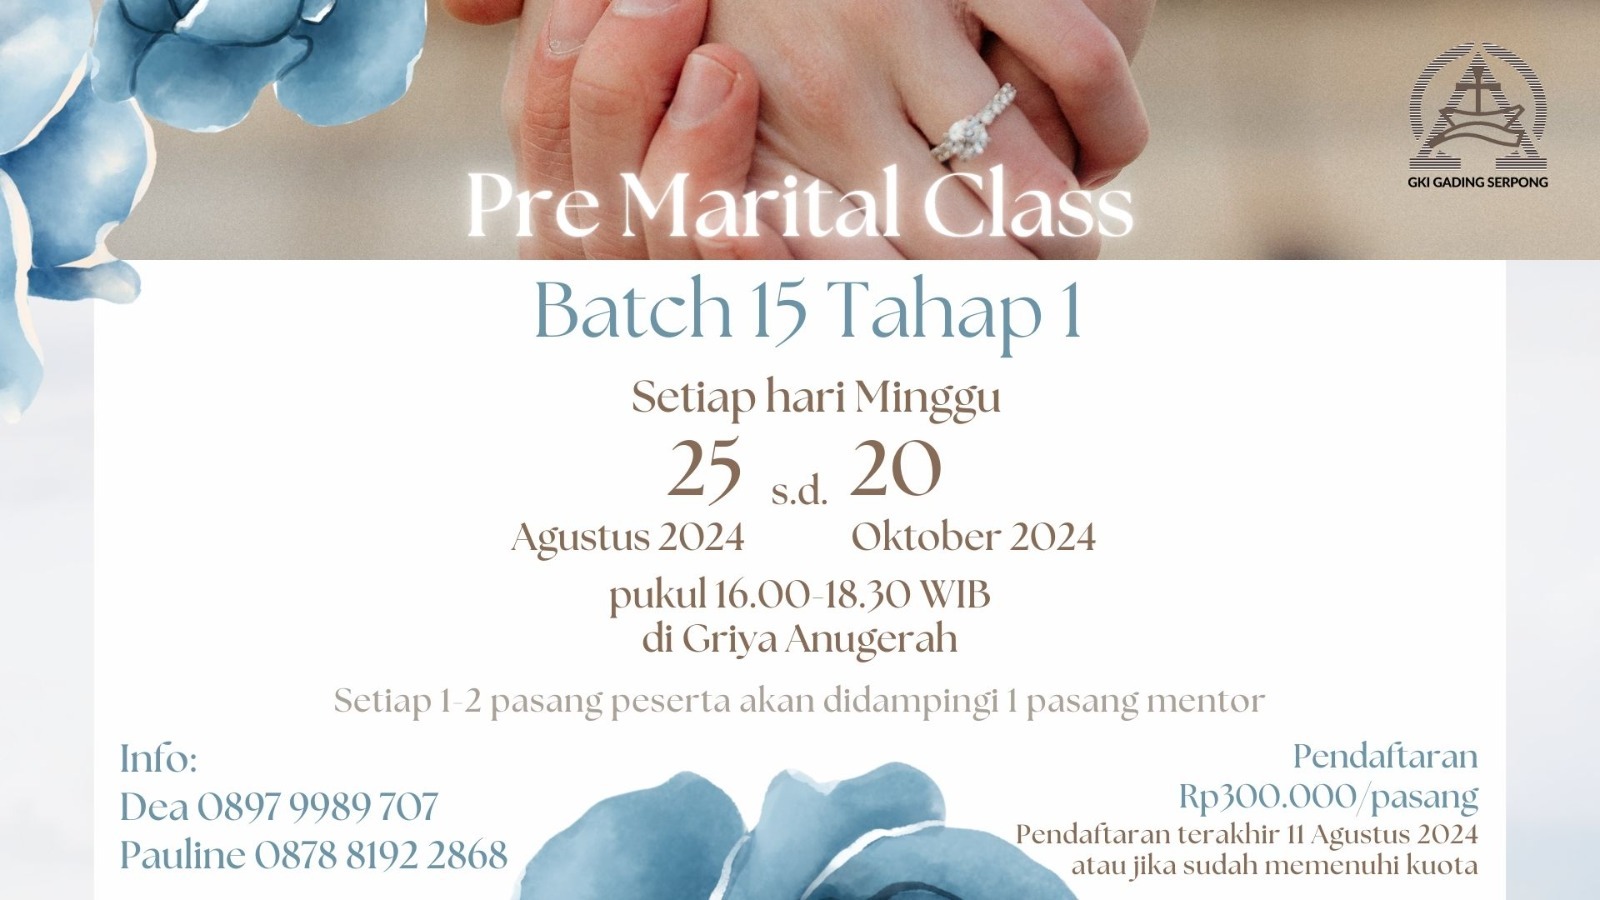 Pre Marital Class Batch 15